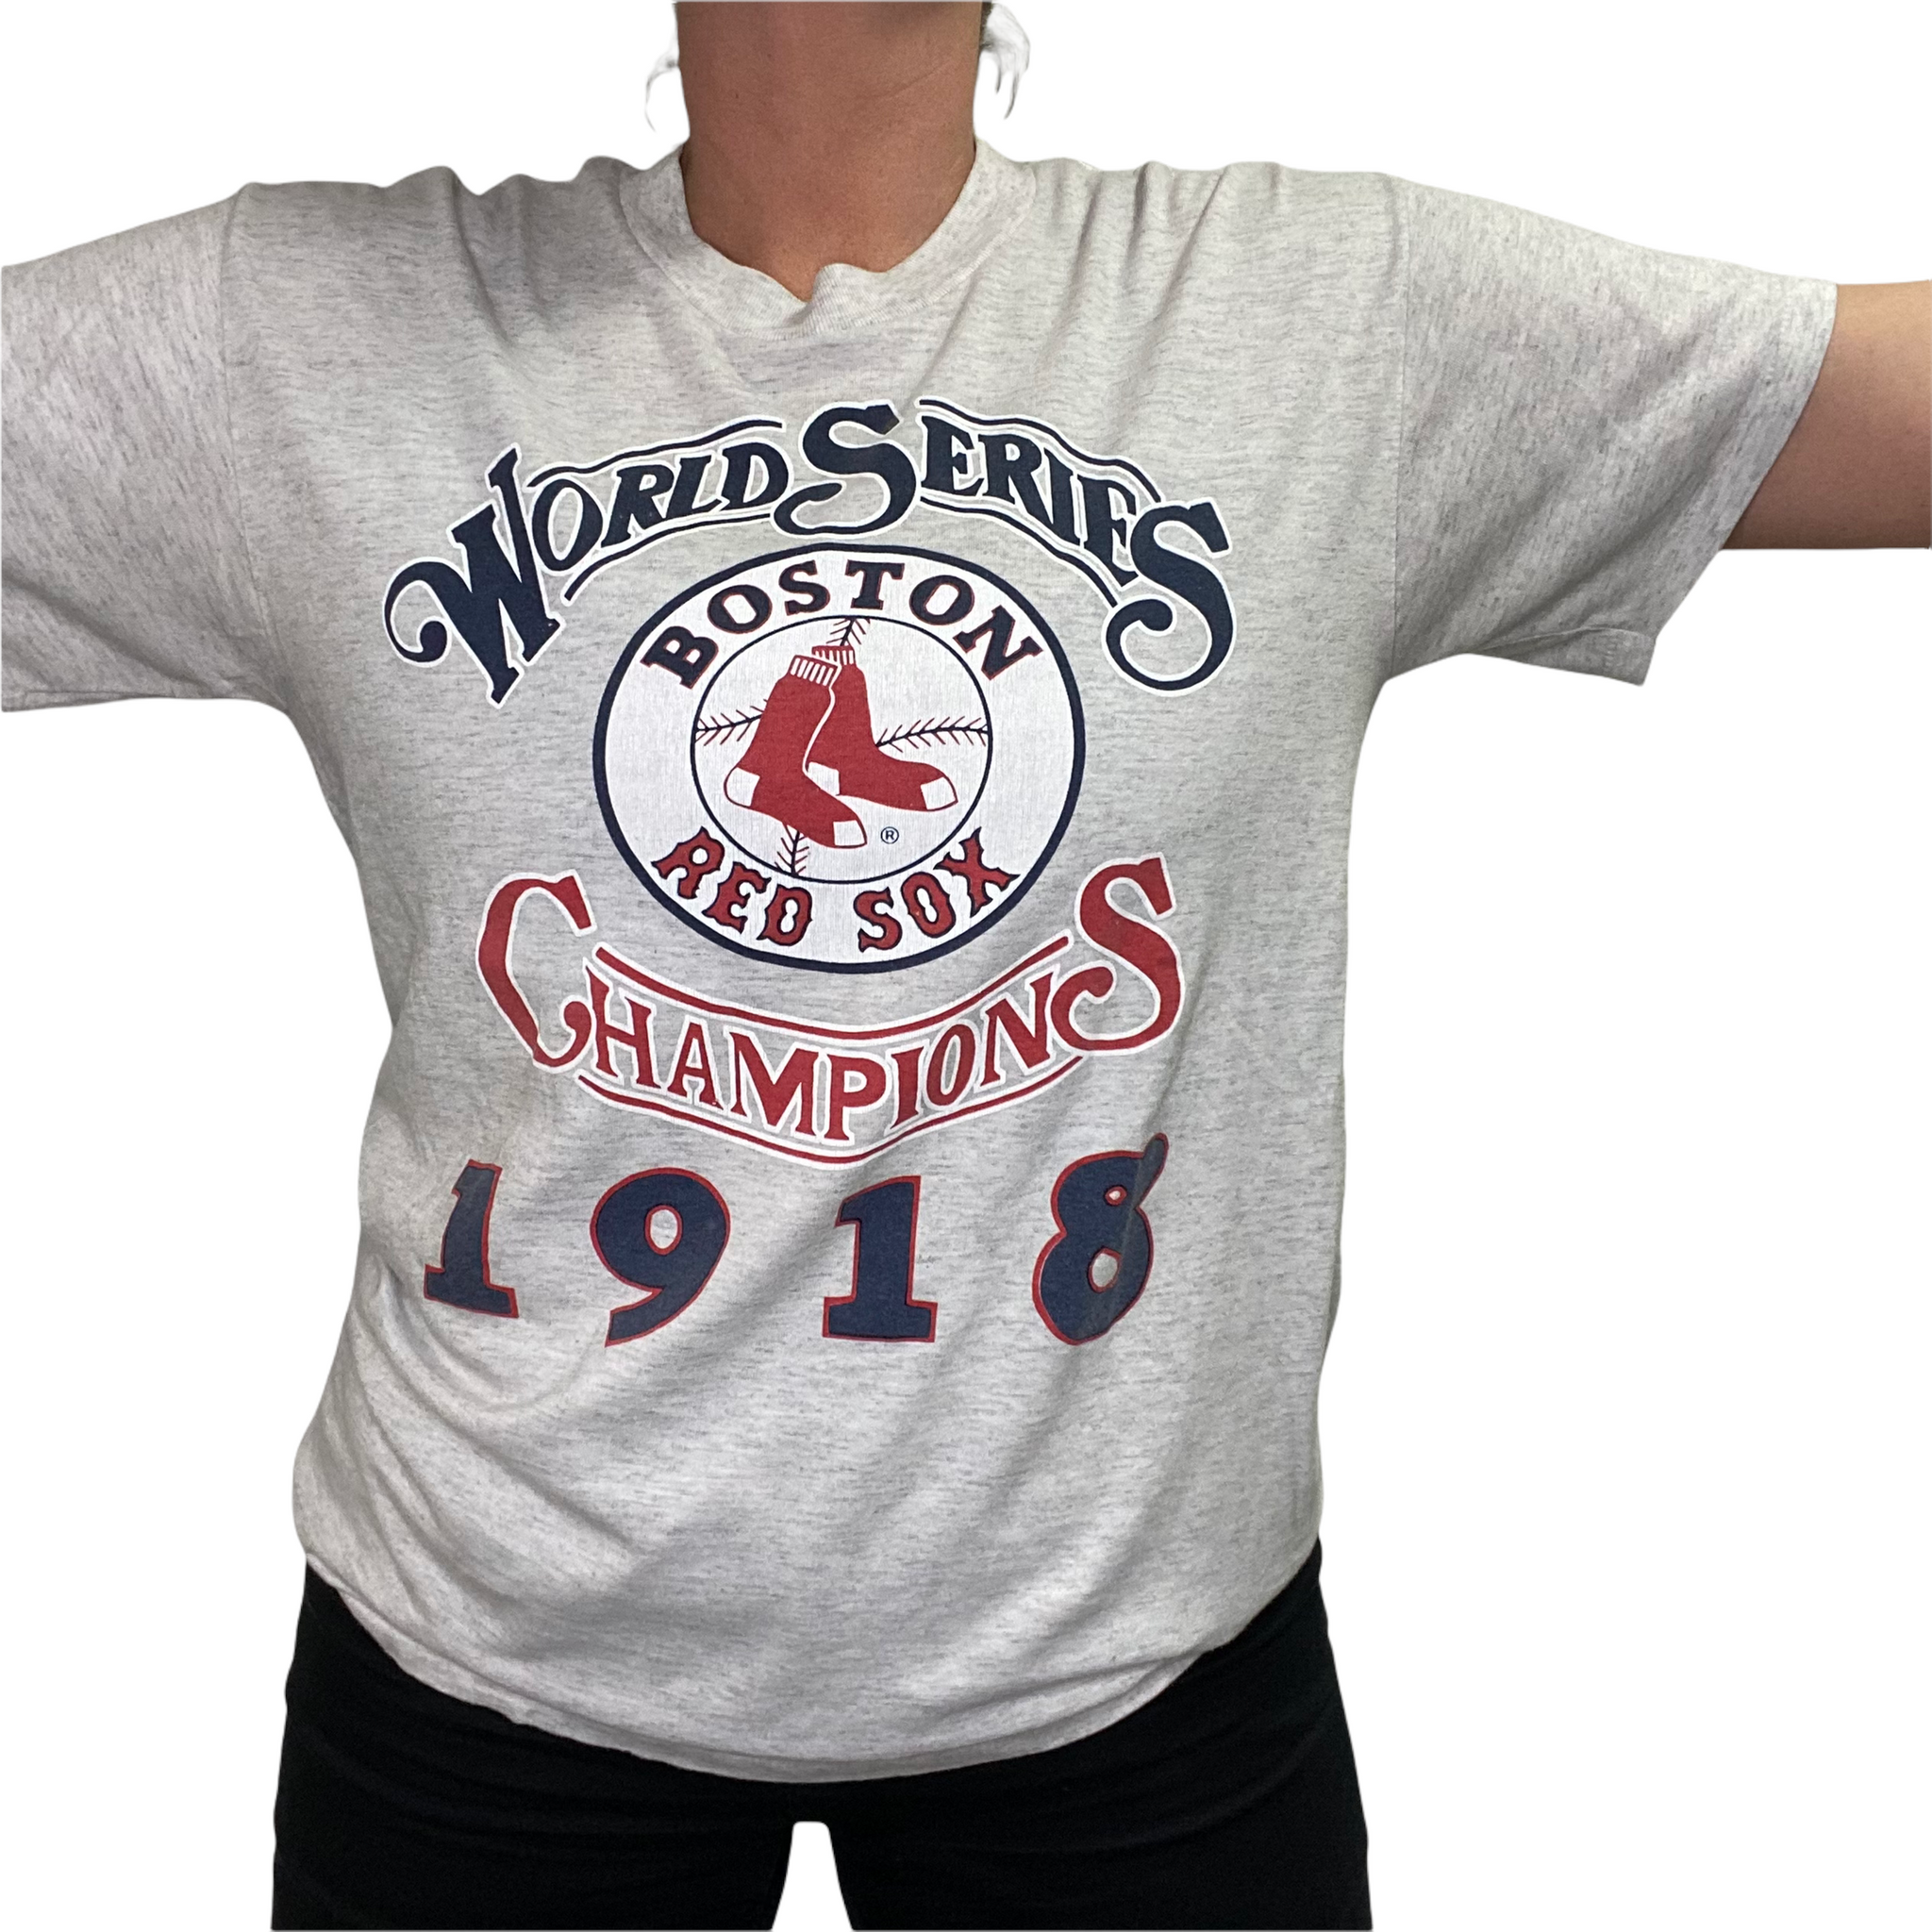 Boston Red Sox 1901 Shirt - Teexpace